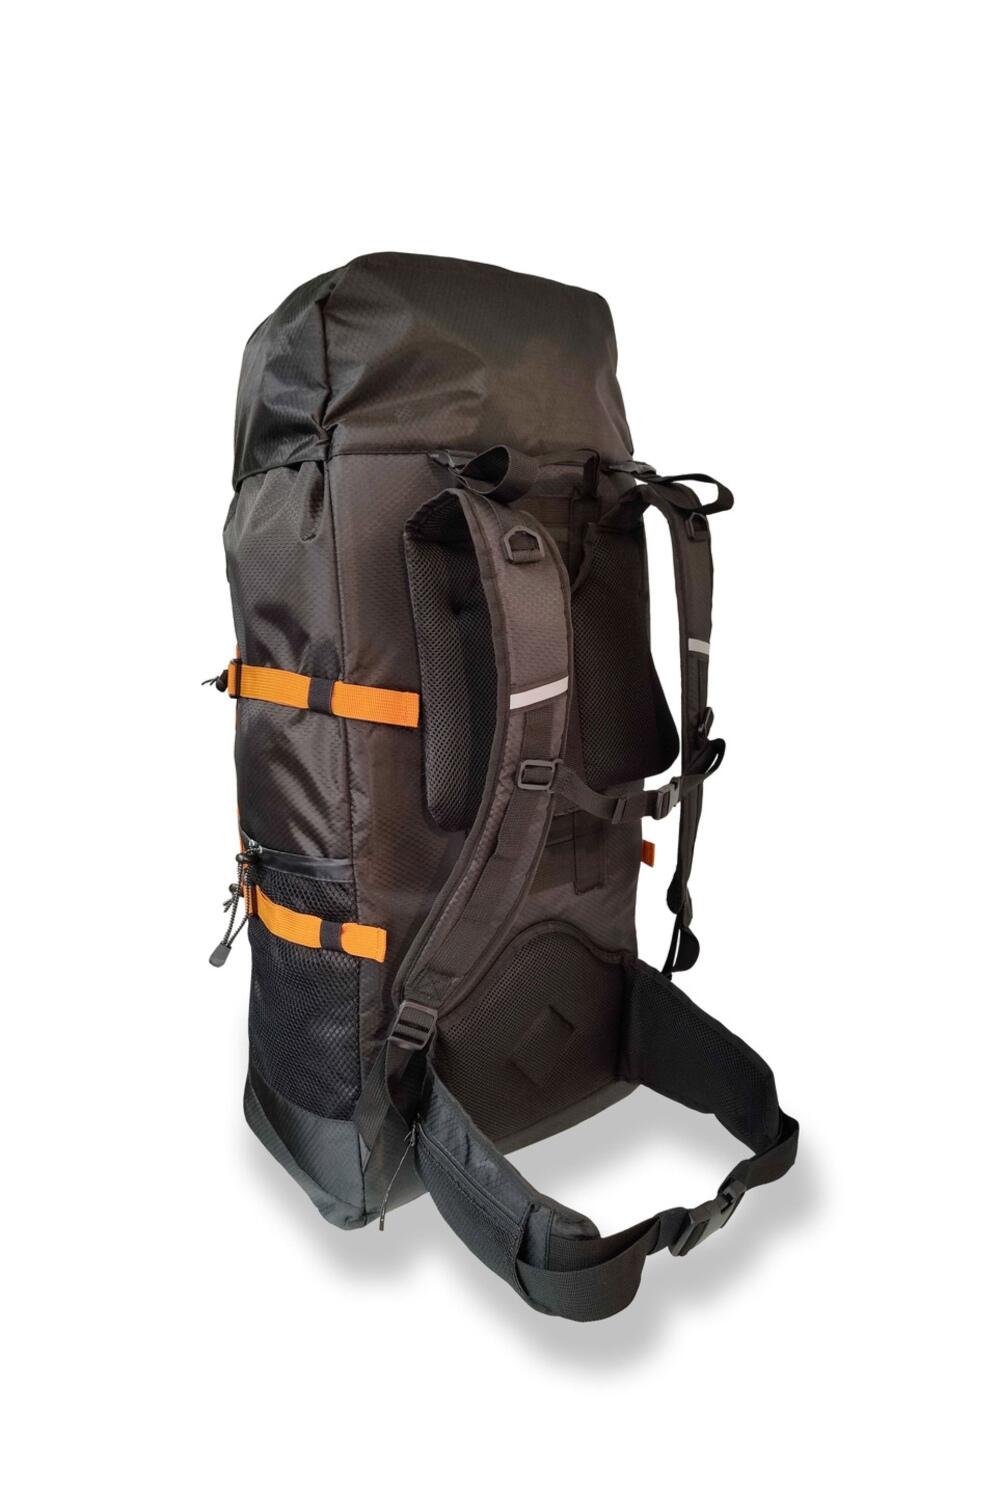 OLPRO 80L Rucksack Bag Black 2/4